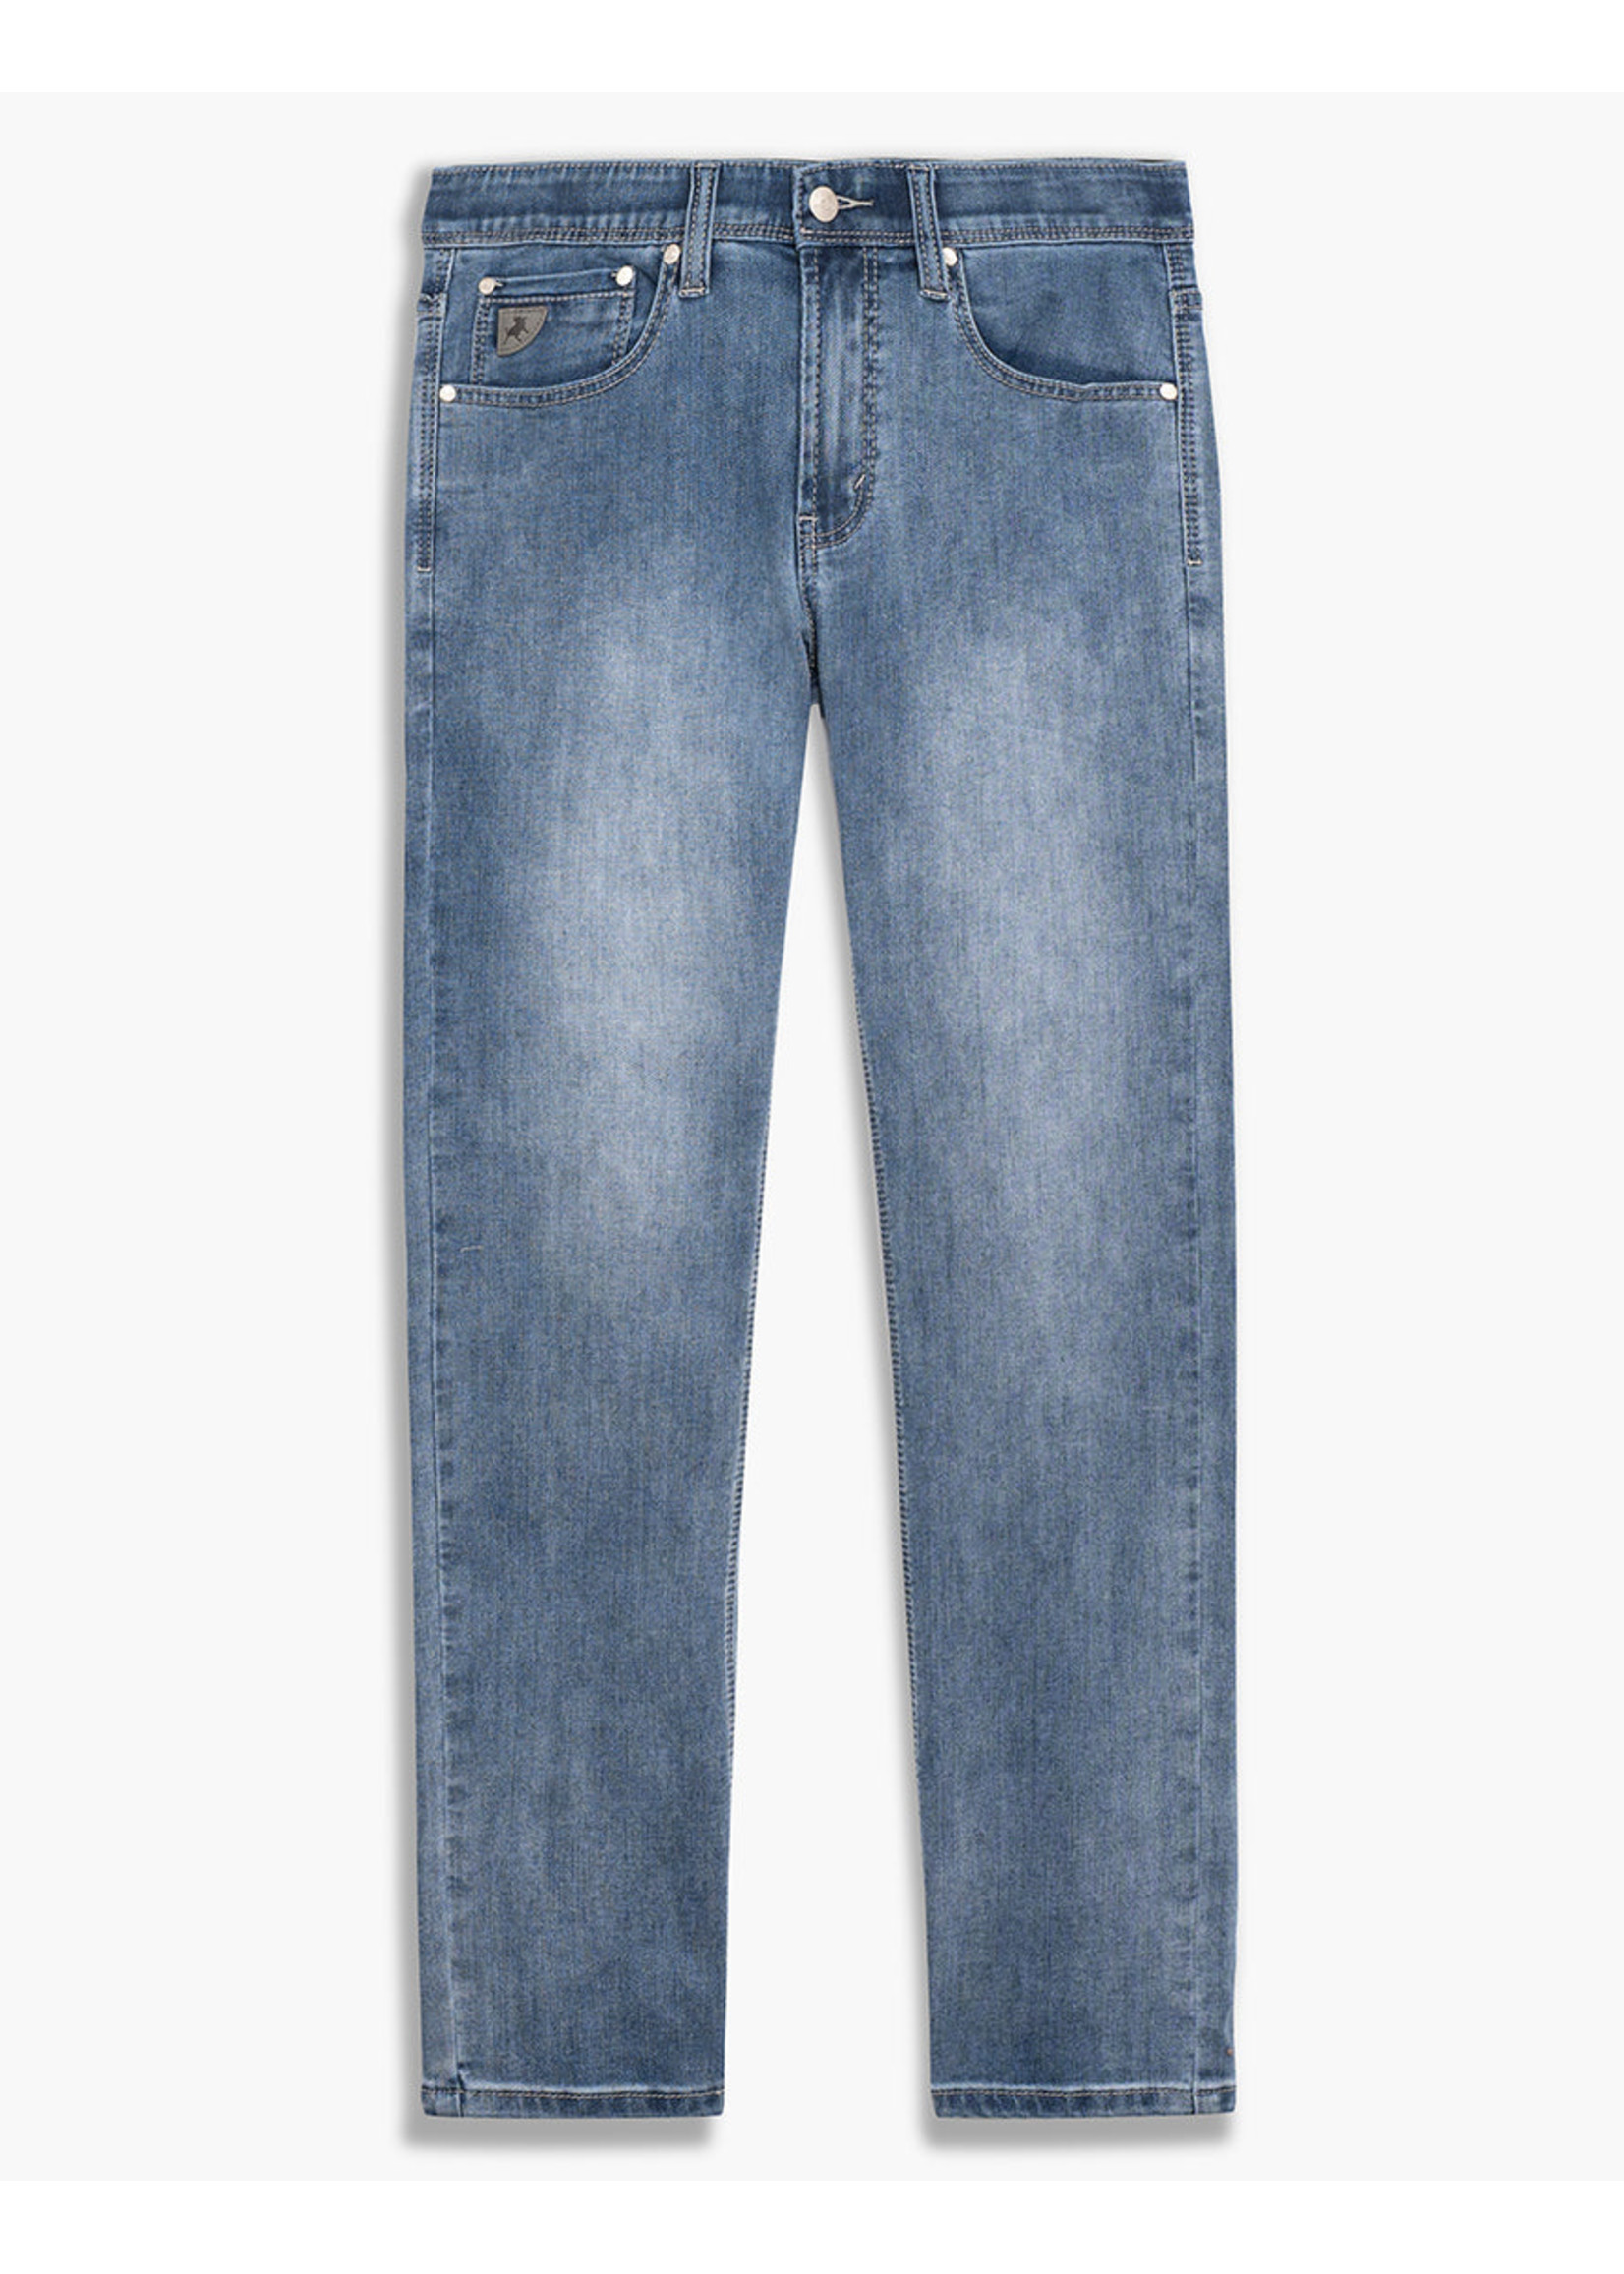 LOIS JEANS & JACKETS Jeans super extensible coupe Peter slim-Homme